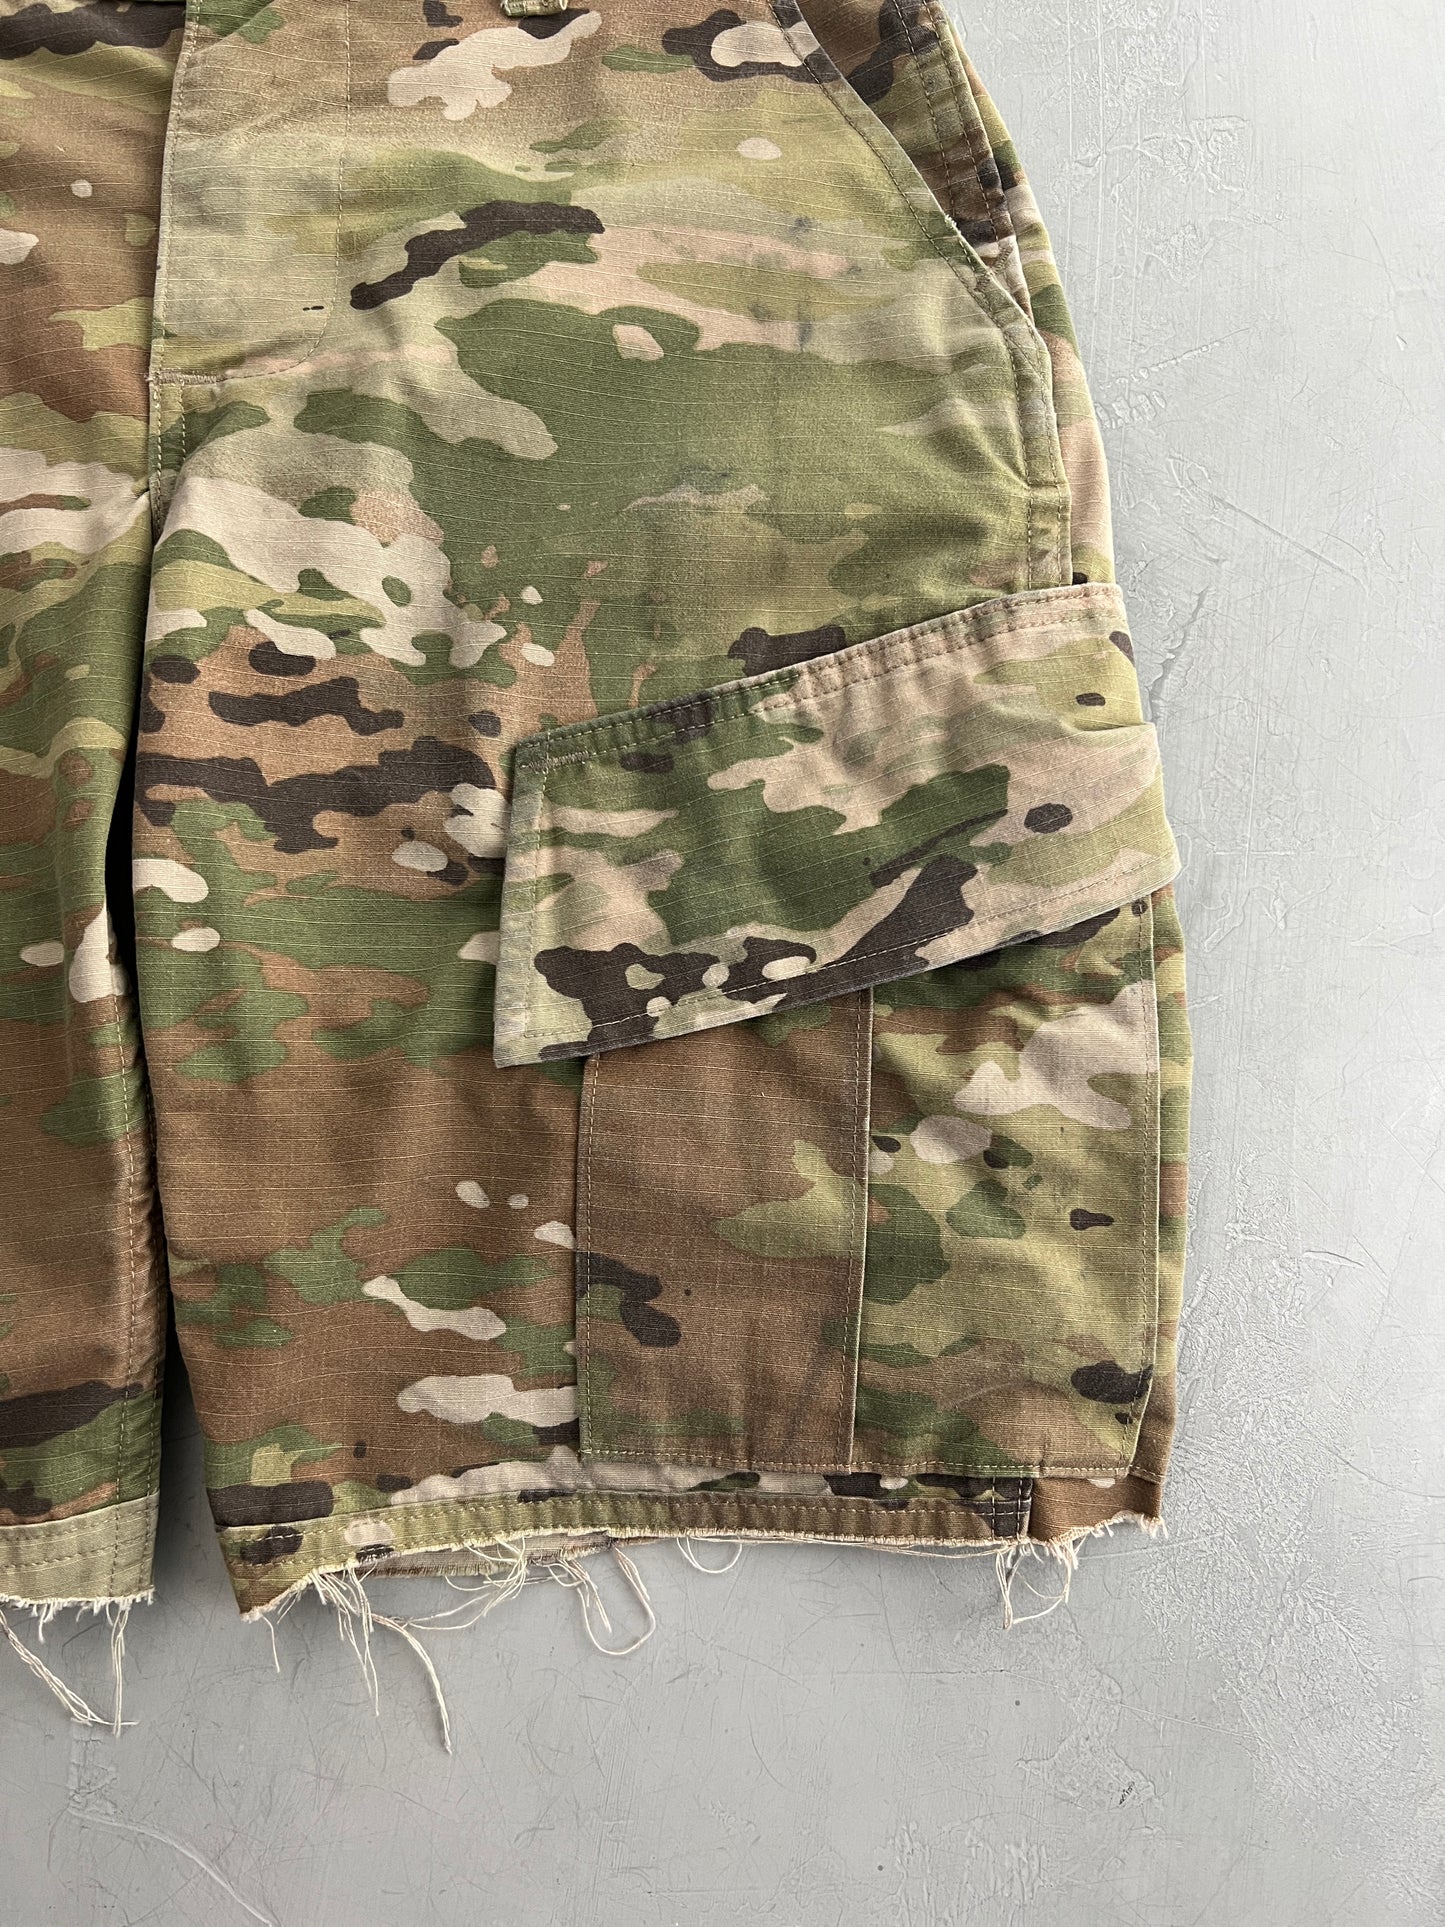 NATO Cut-Off Shorts [31"]